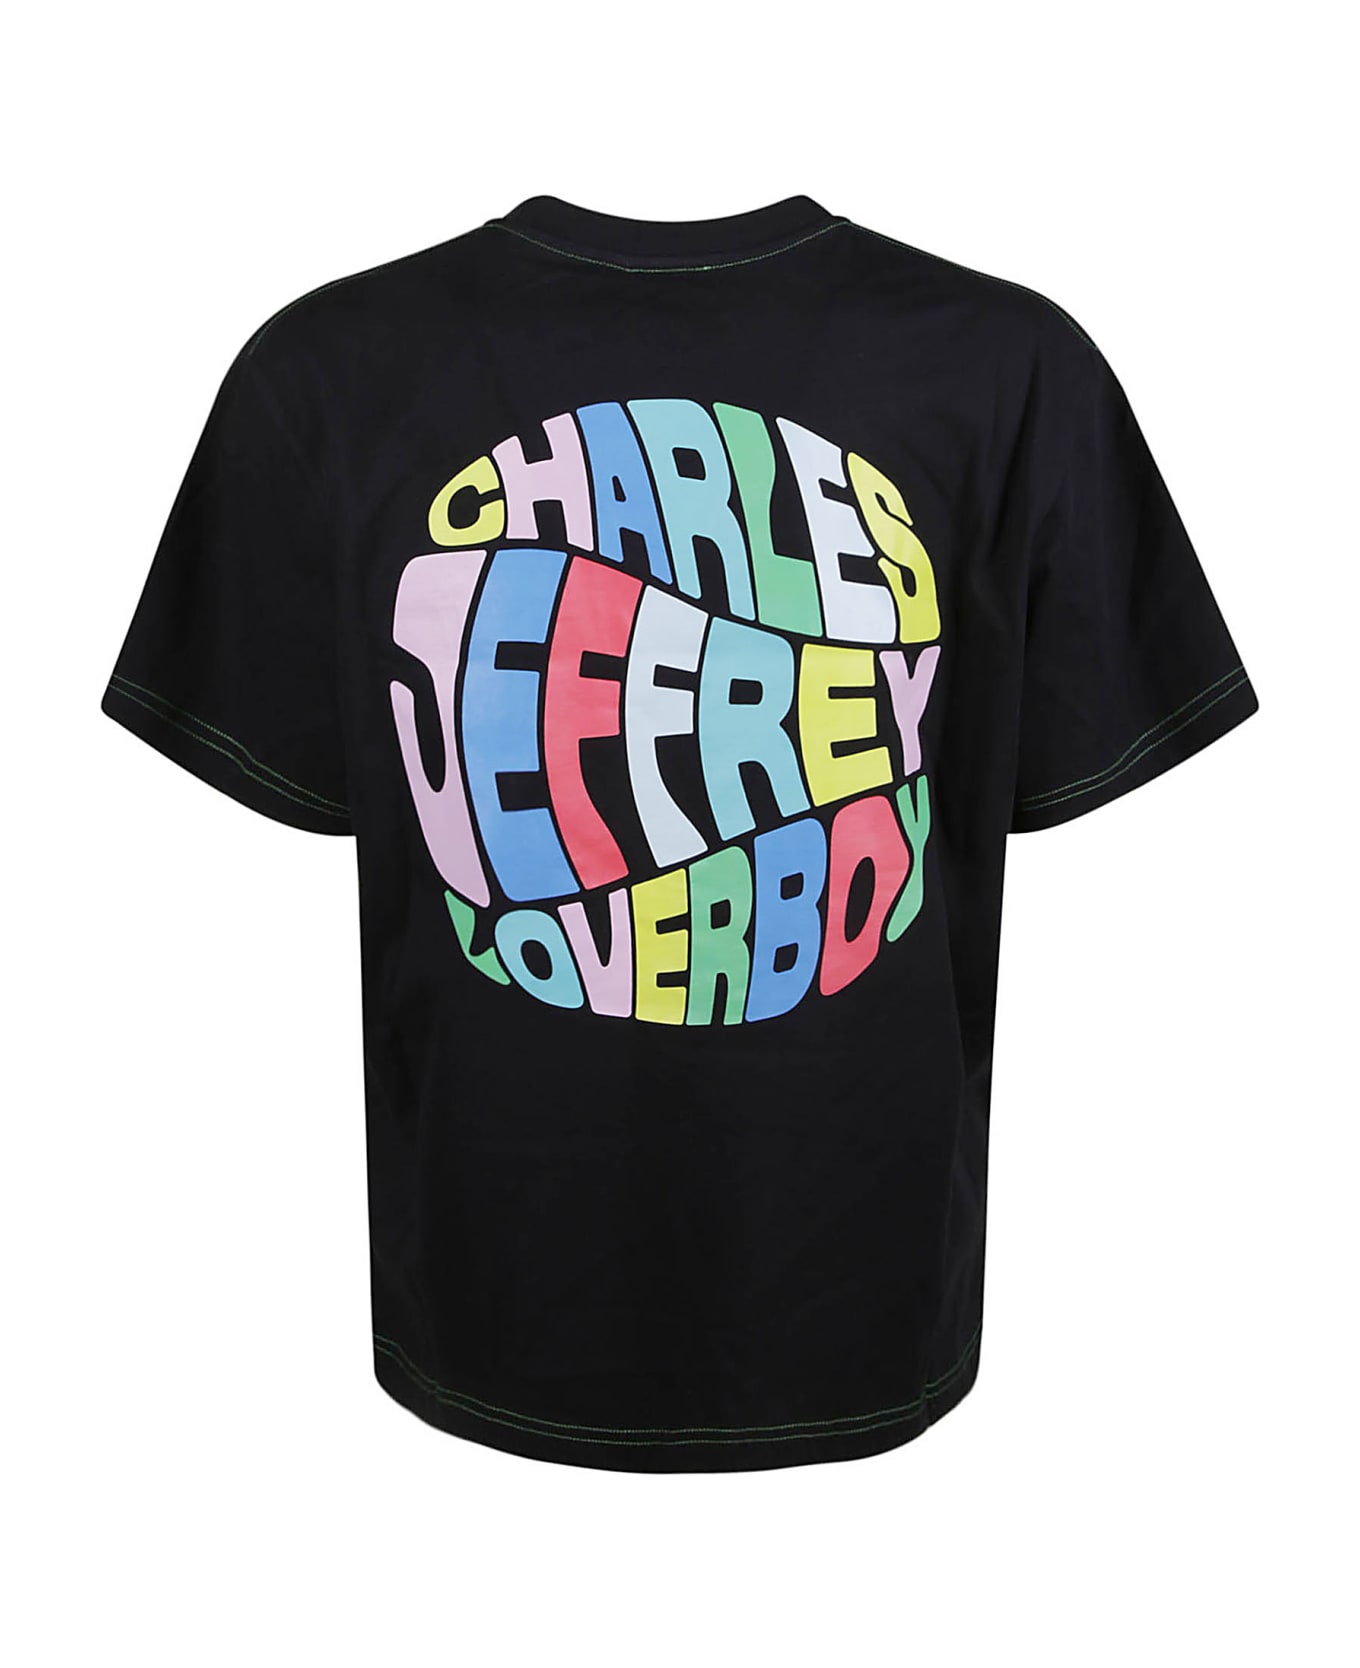 Charles Jeffrey Loverboy Logo Print T-shirt - Black 